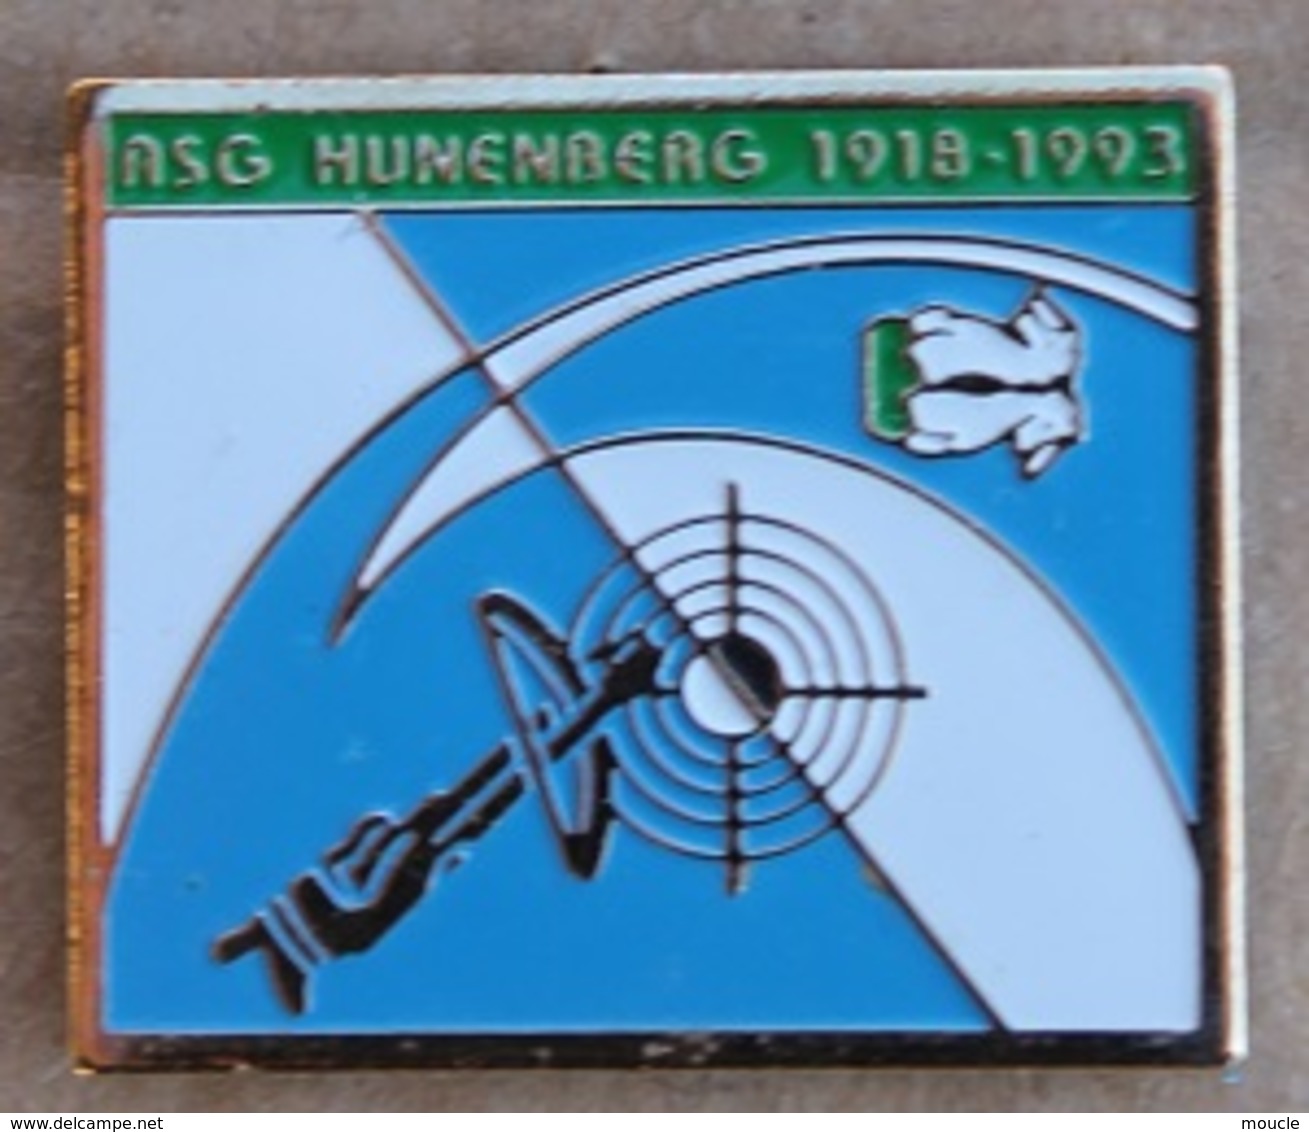 TIR A L'ARC - ARBALETE - CIBLE - RSG - HUNENBERG 1918 / 1993 - SCHWEIZ - SUISSE  -   (21) - Archery